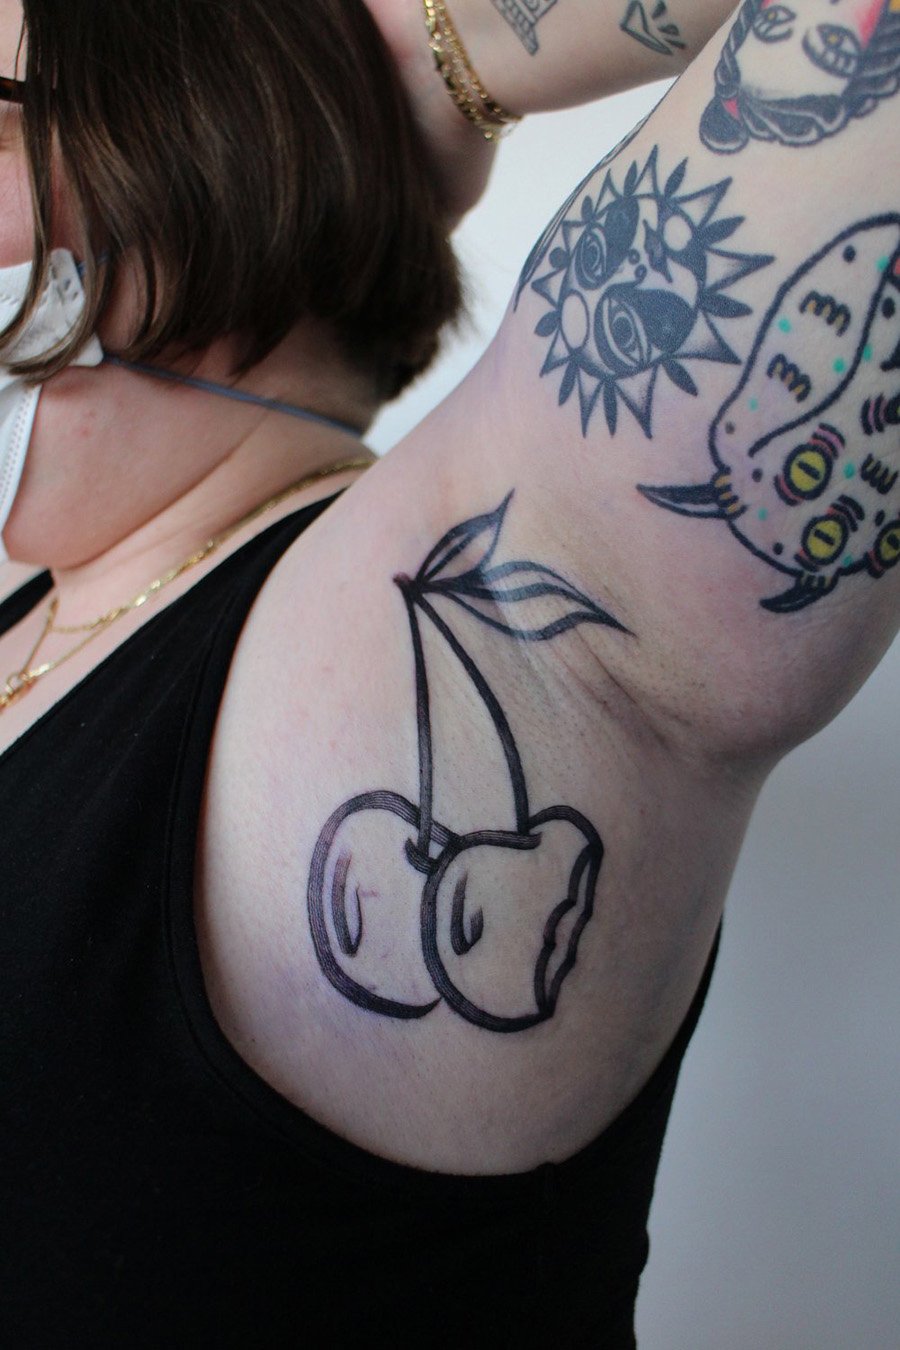 cherries cherry under arm armpit tattoo bold mag drag Jacqueline may tattoo art black and grey toronto artist.jpeg